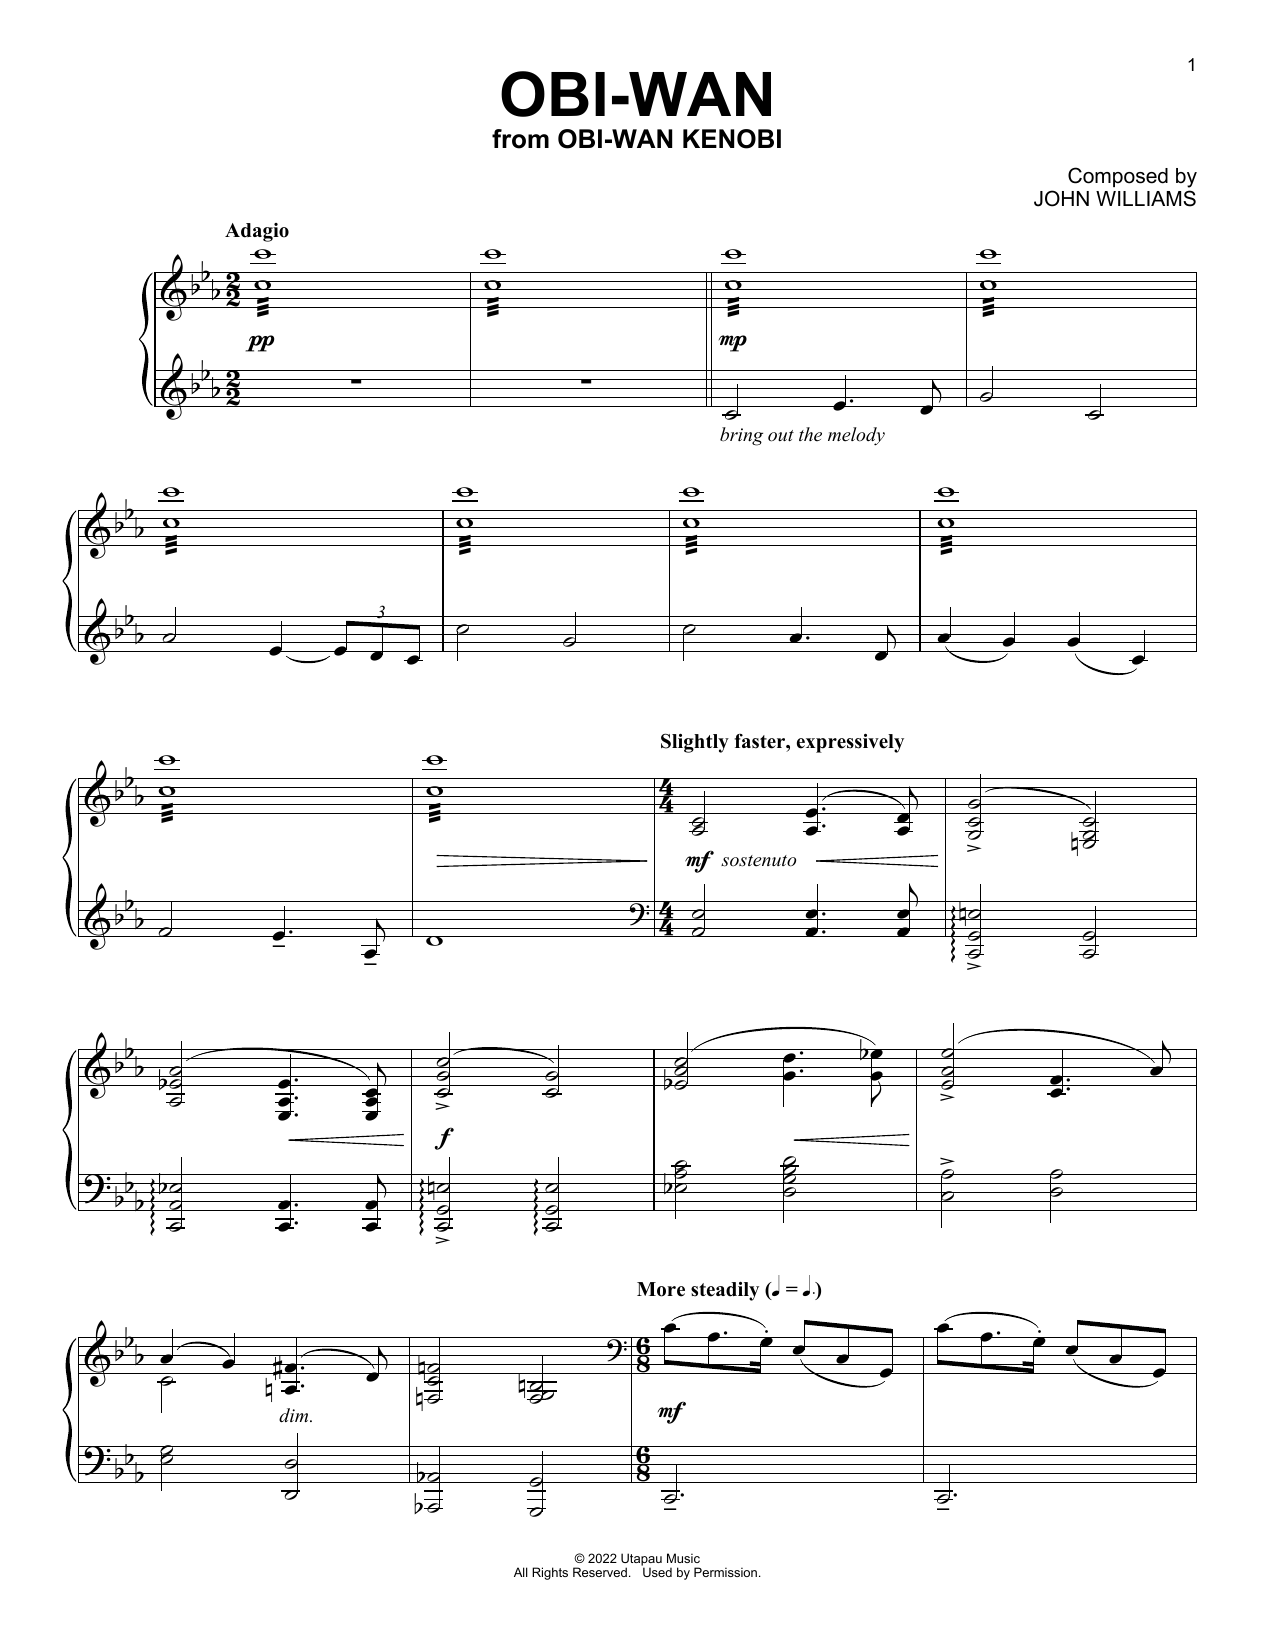 Download John Williams Obi-Wan (from Obi-Wan Kenobi) Sheet Music and learn how to play Piano Solo PDF digital score in minutes